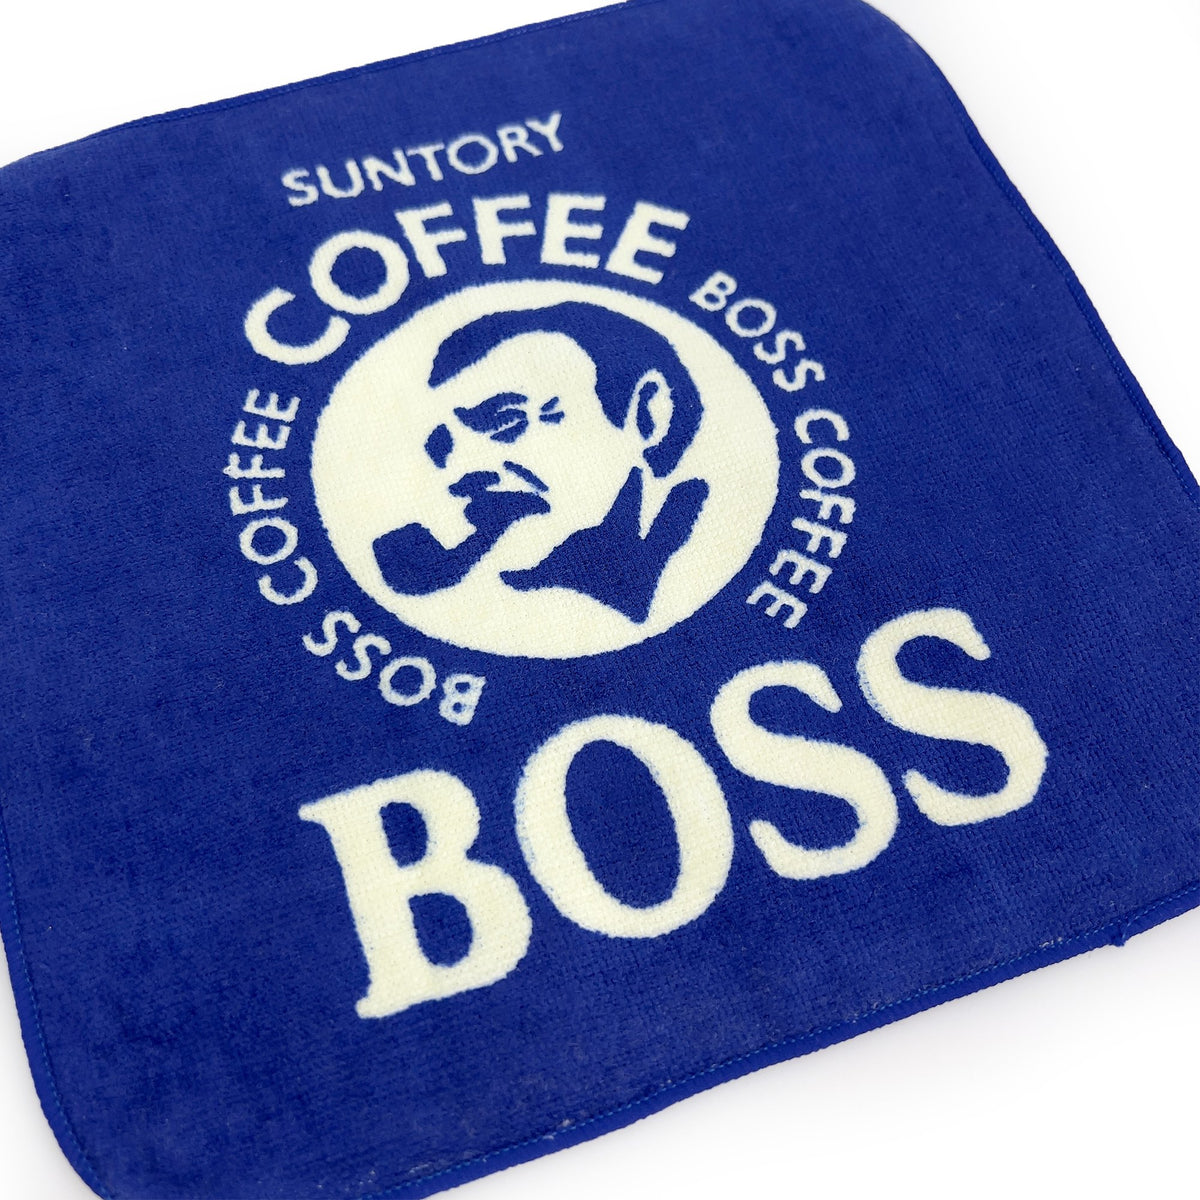 New Vintage Promotional Japan Suntory Boss Coffee Face Towel Blue - Sugoi JDM